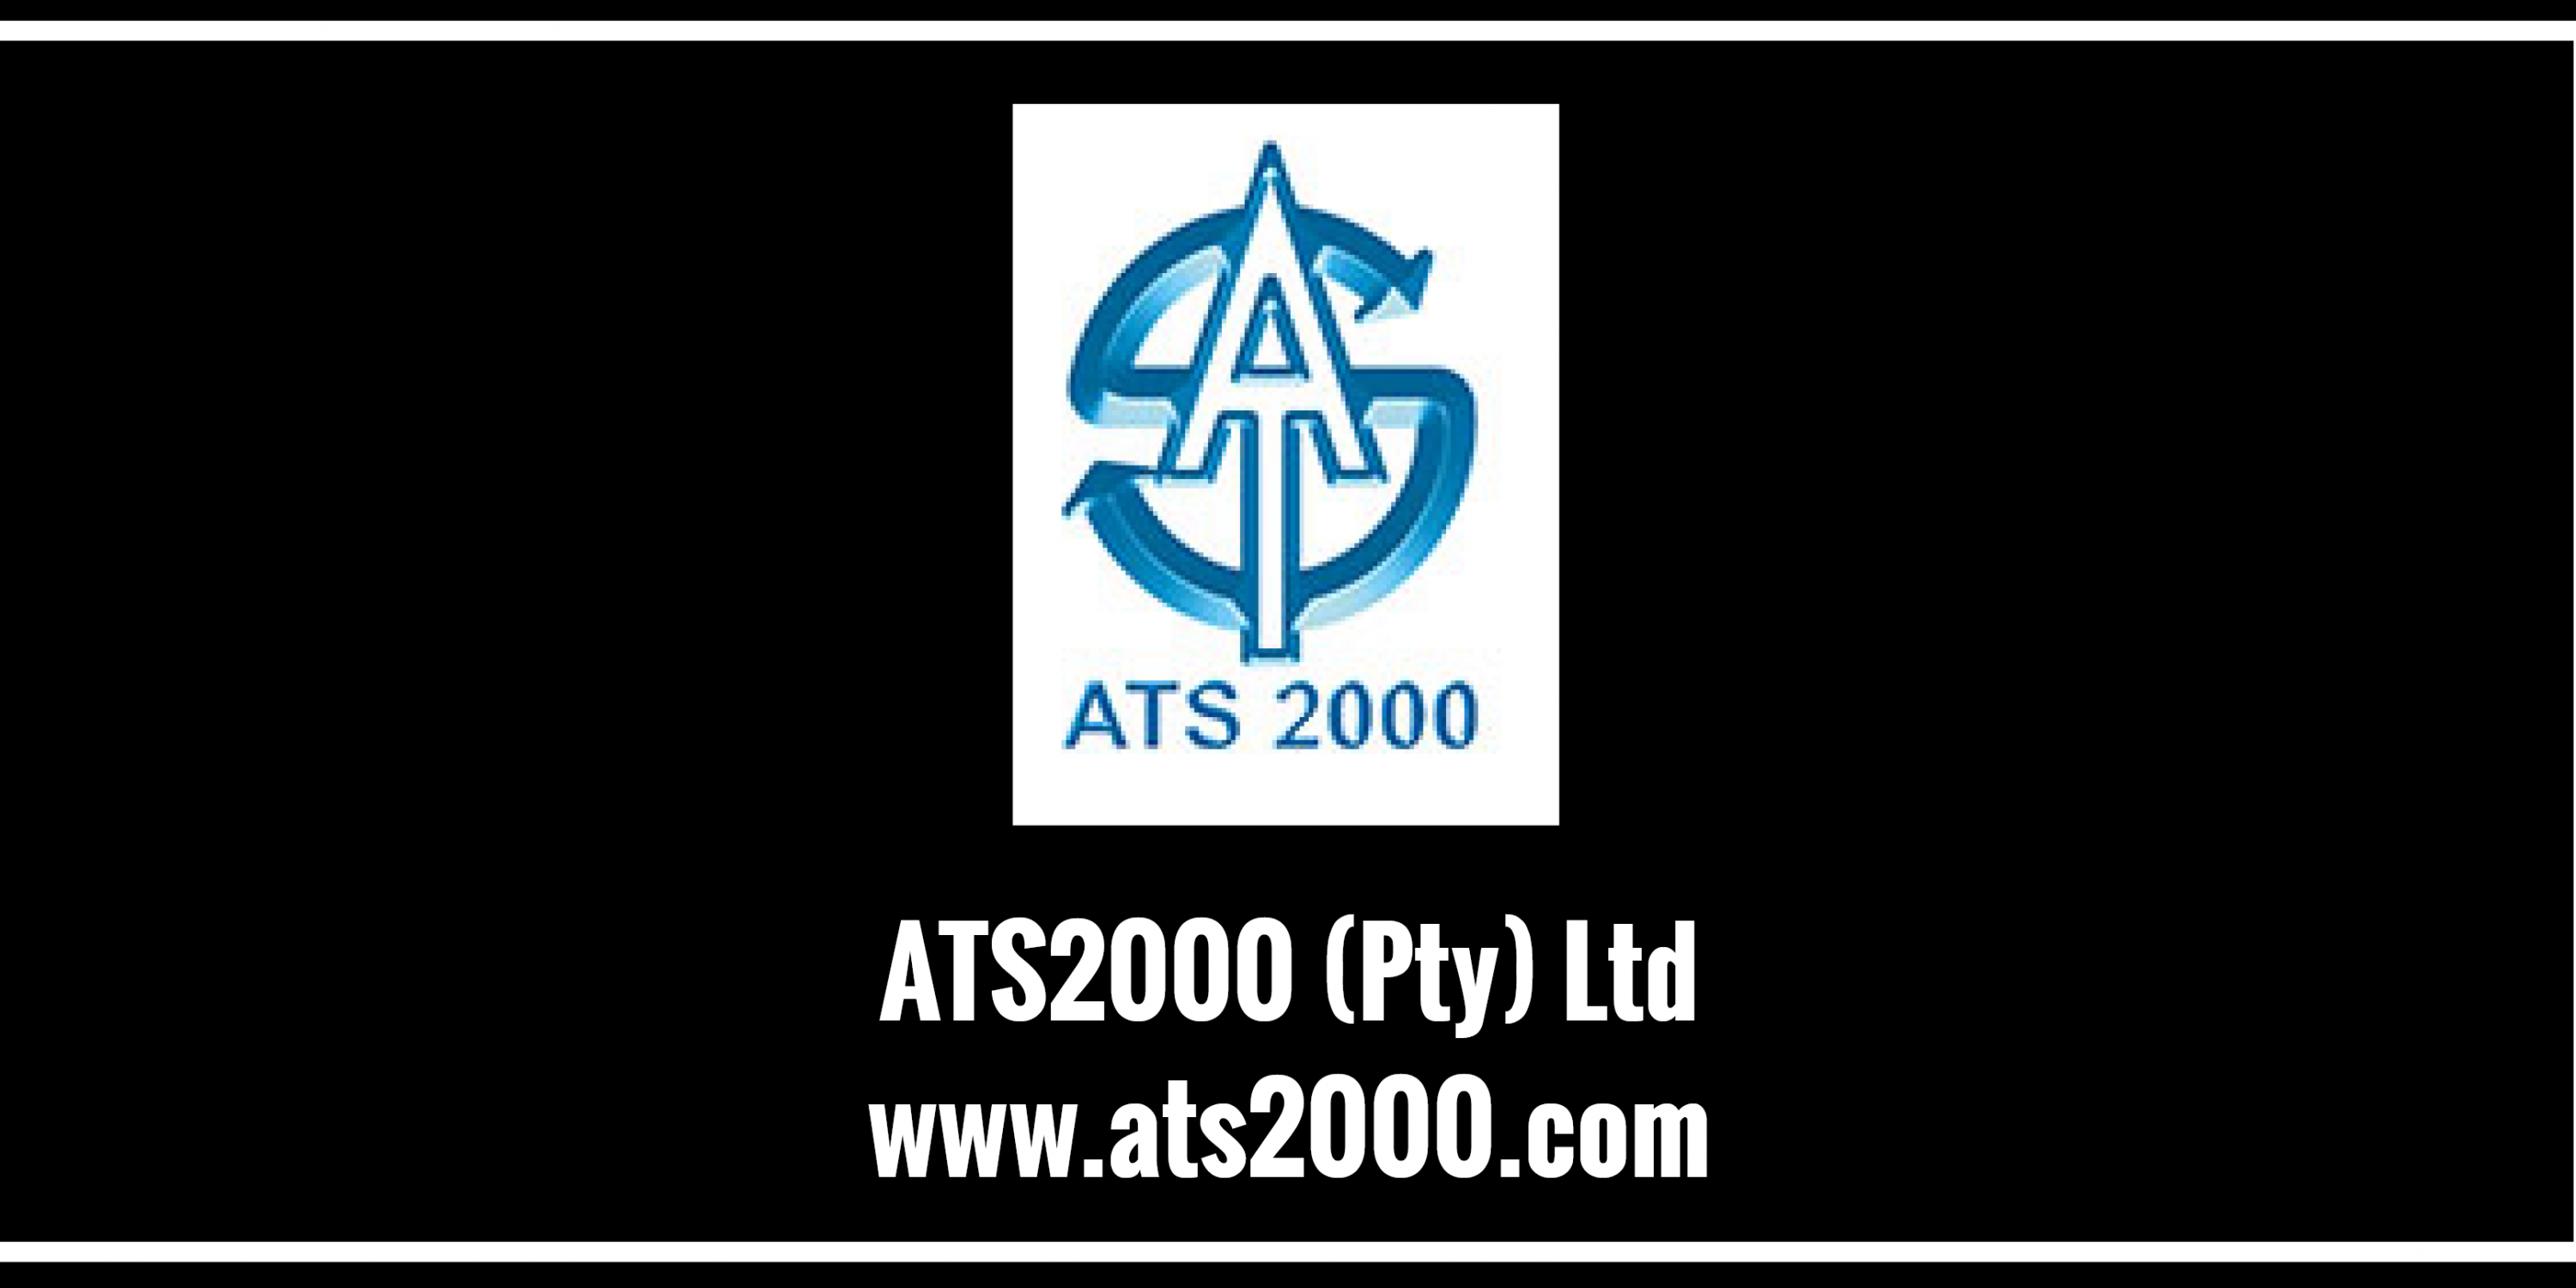 ATS2000 (Pty) Ltd